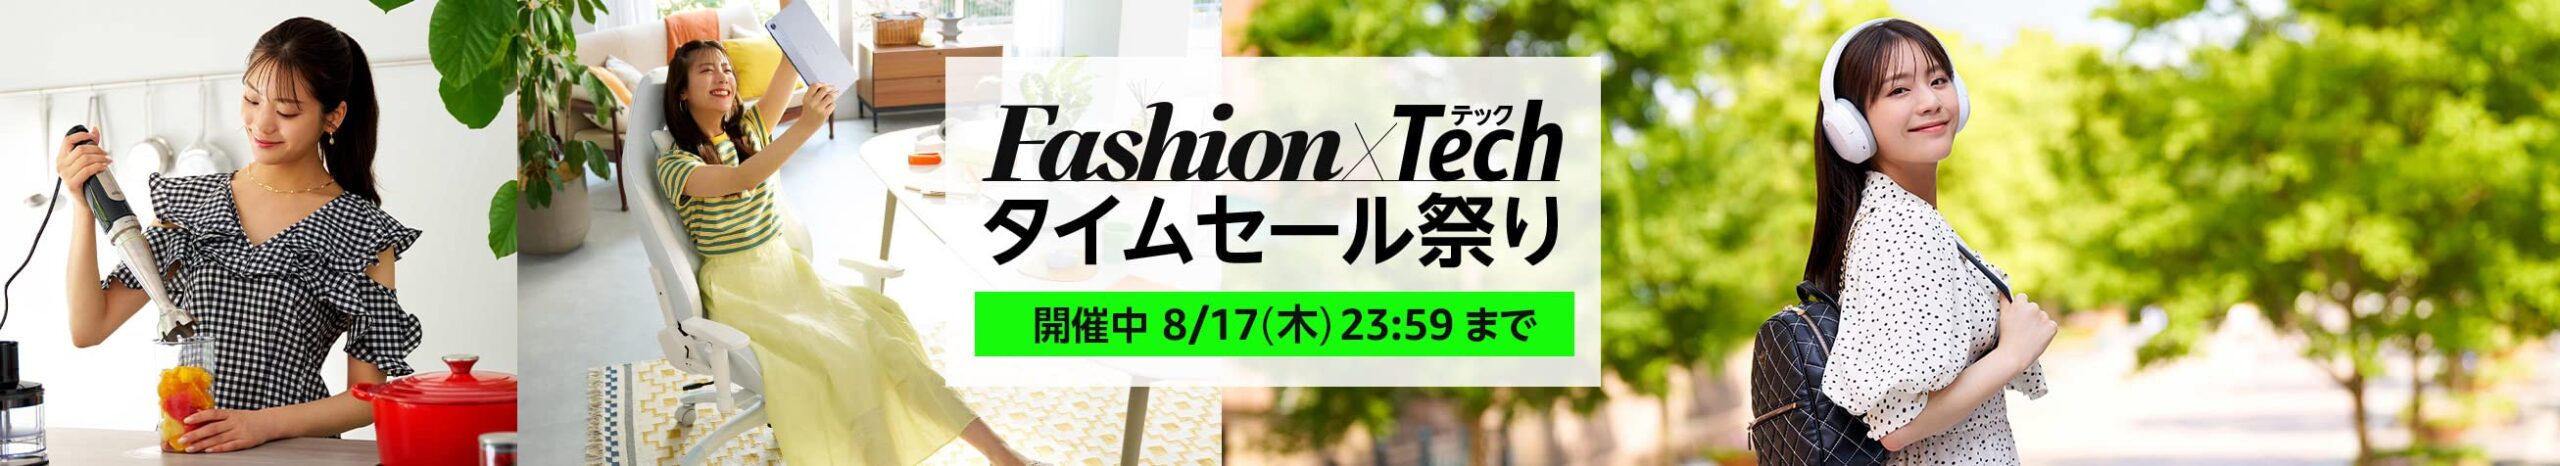 Amazon「Fashion x Tech タイムセール祭り」